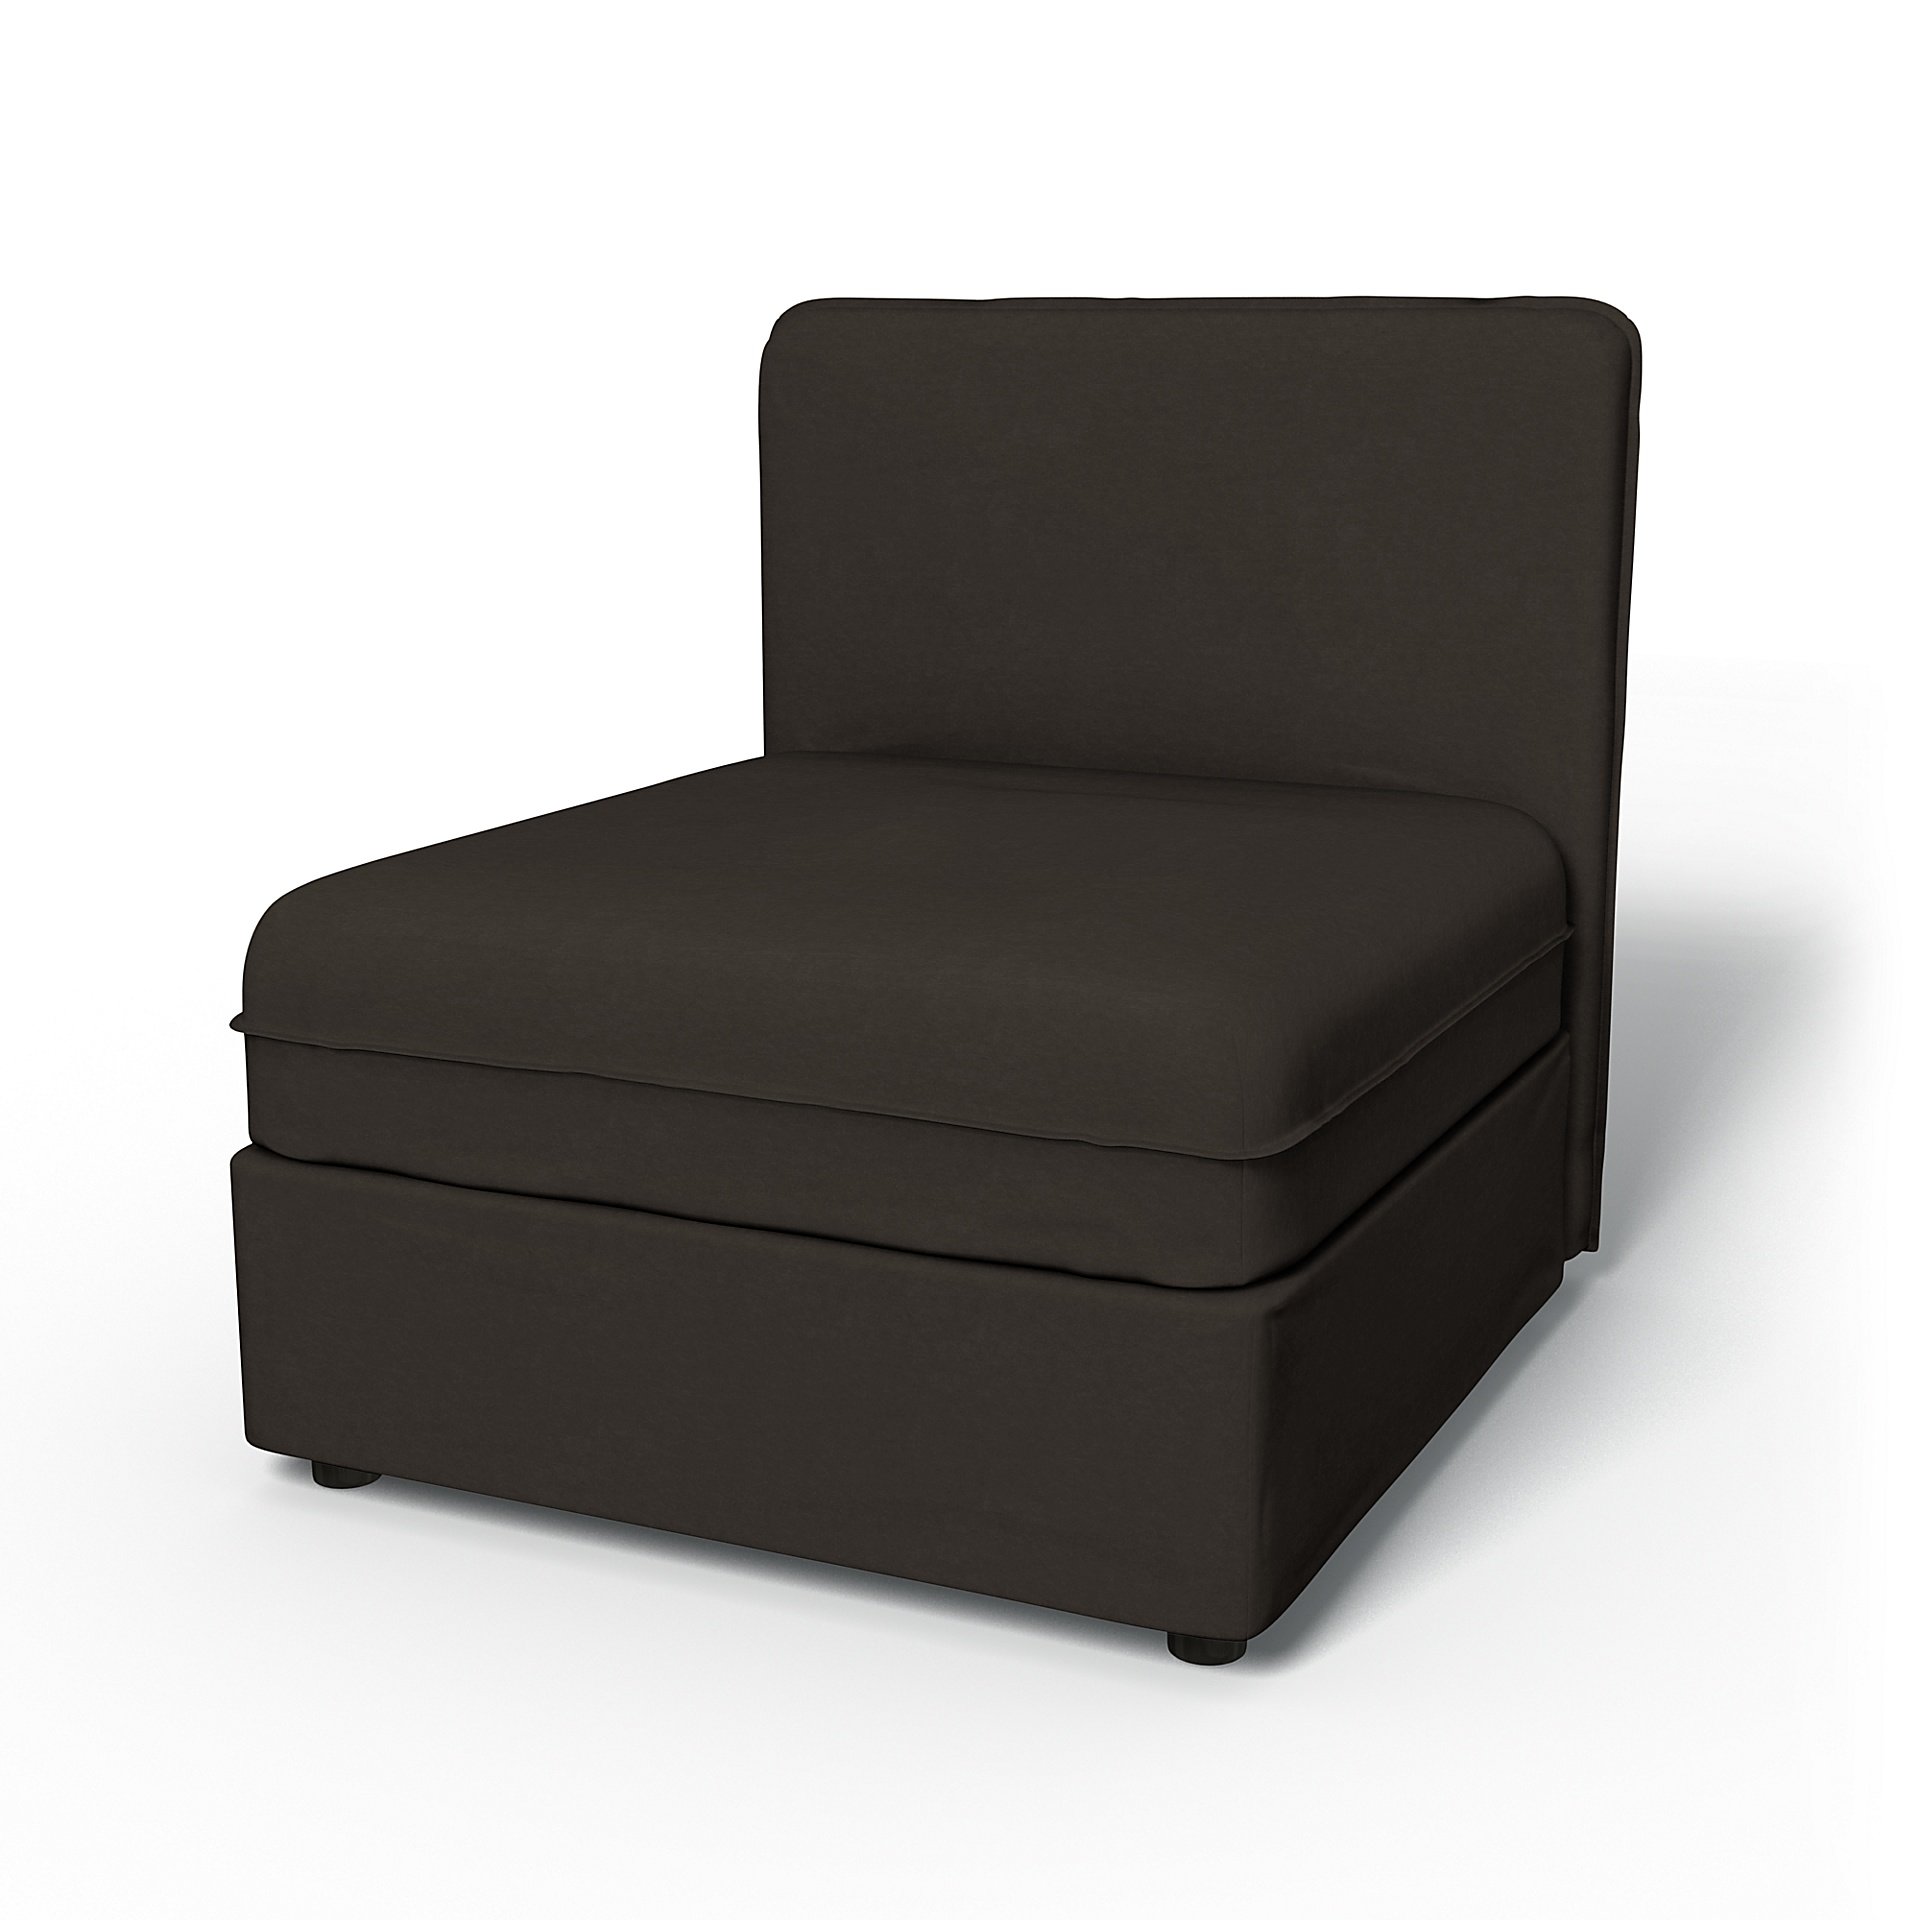 IKEA - Vallentuna Seat Module with Low Back Cover 80x80cm 32x32in, Licorice, Velvet - Bemz